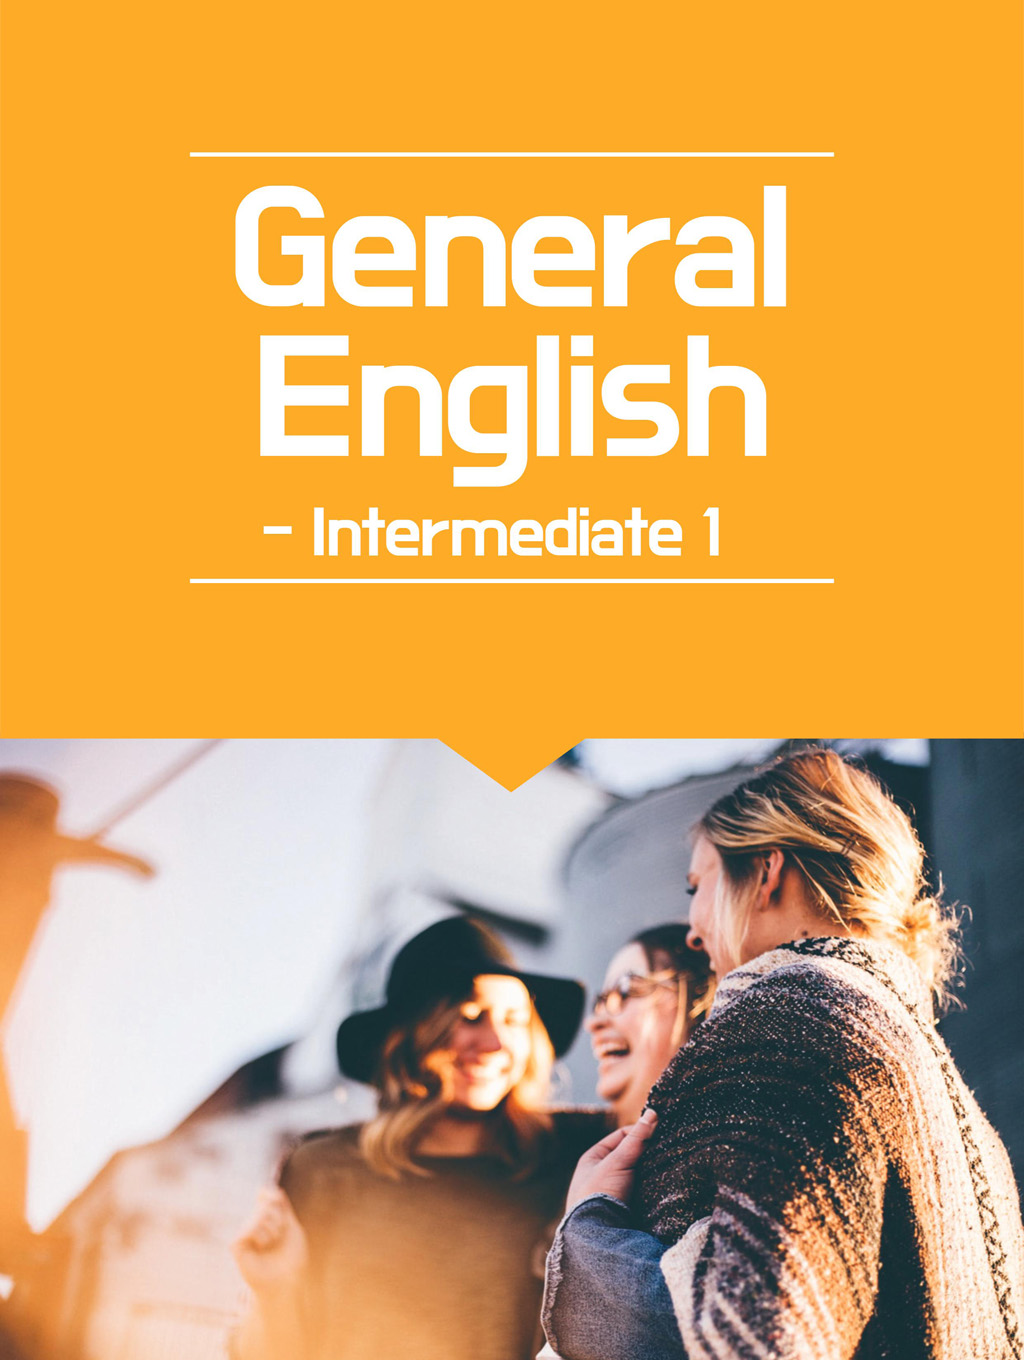 General English - Intermediate 1